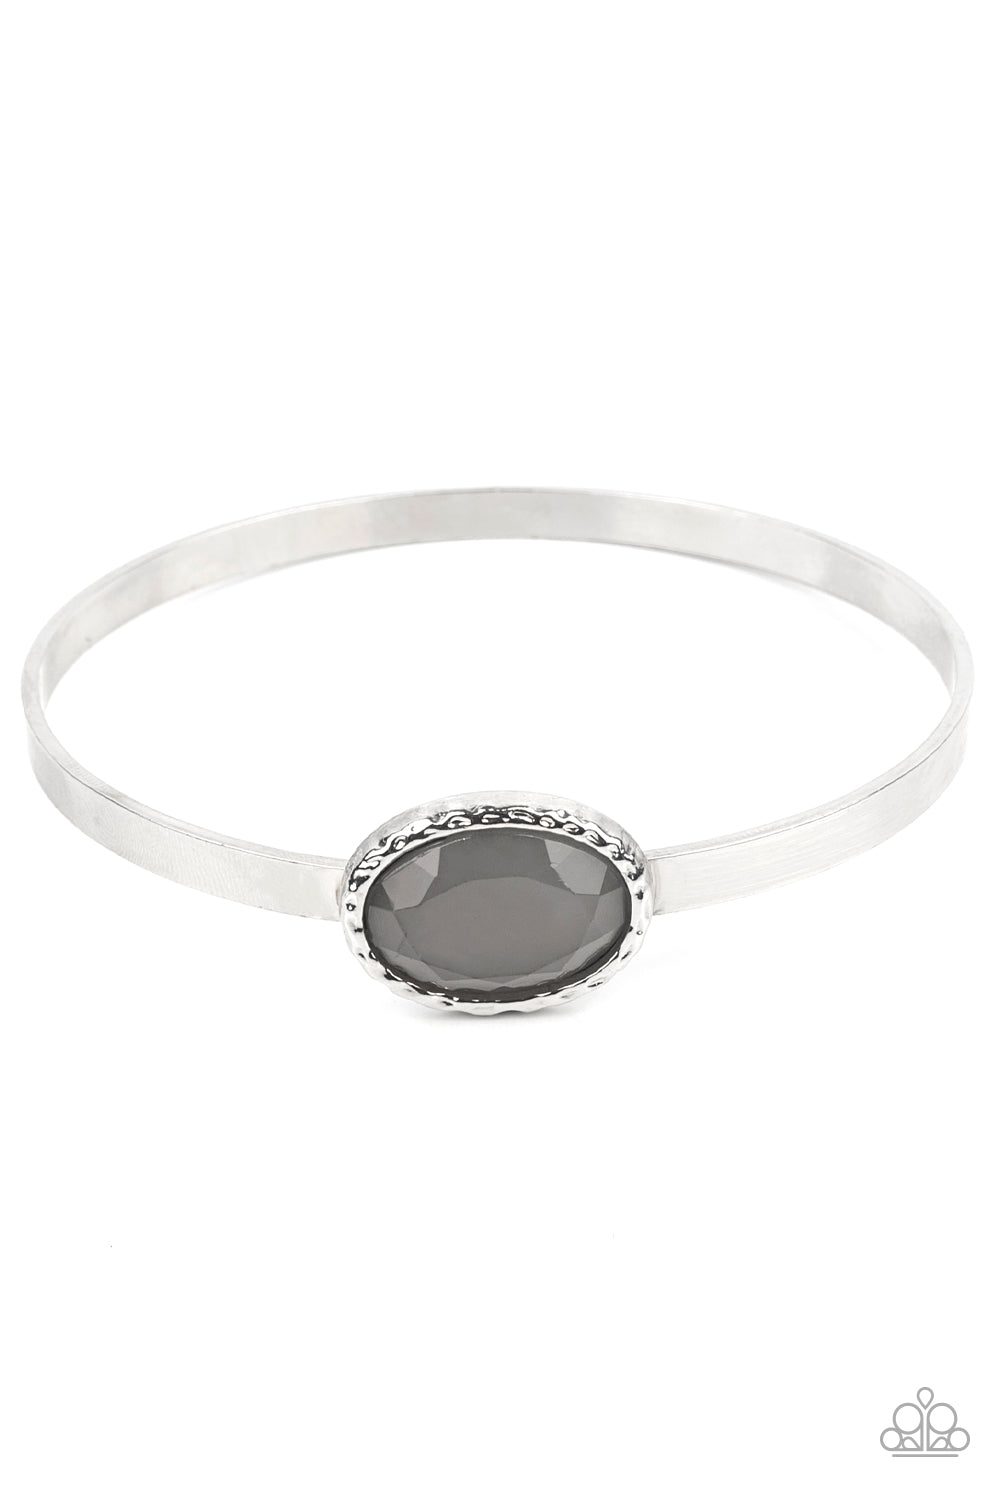 Misty Meadow - silver - Paparazzi bracelet